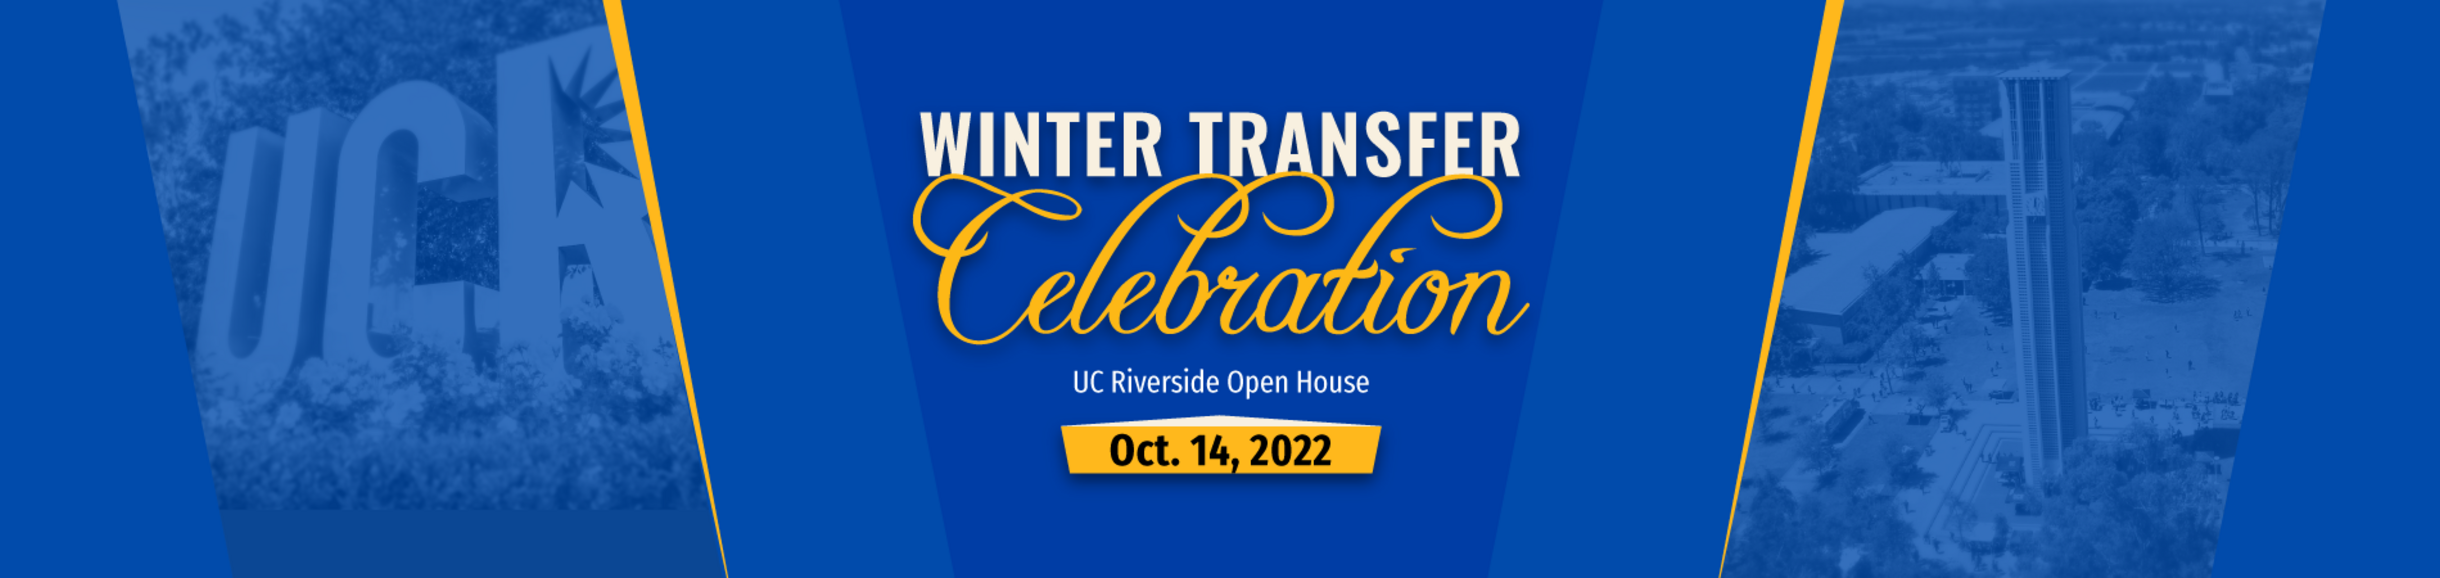 Winter Transfer Celebration | October 14, 2022